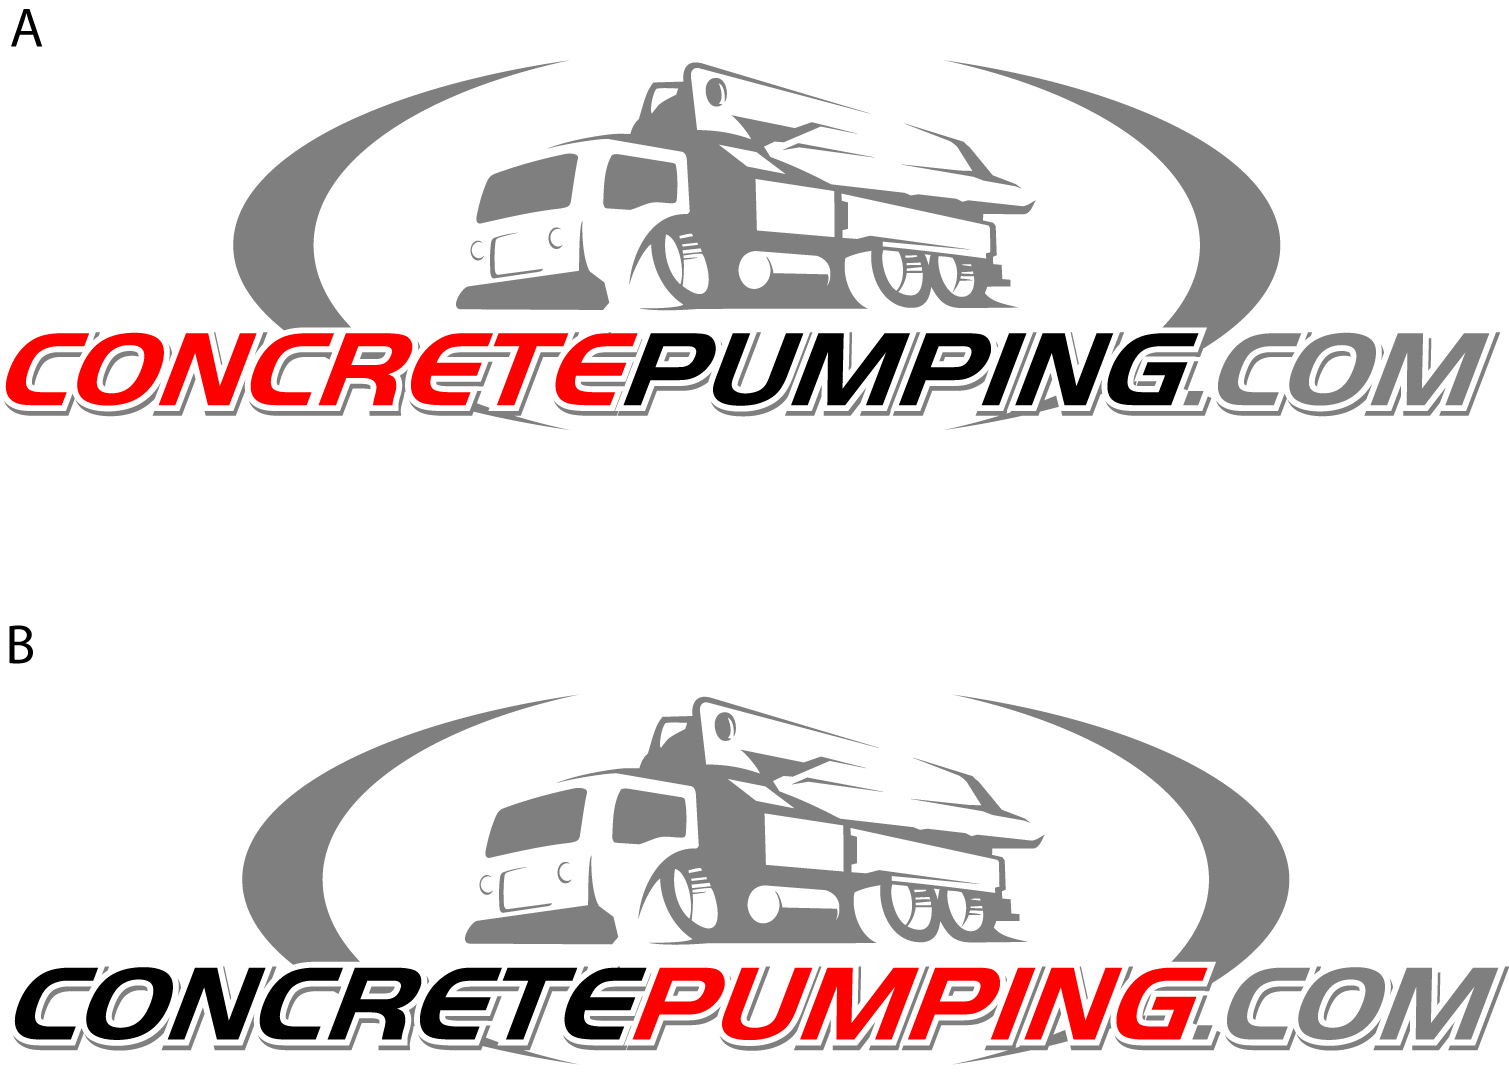 Concrete pumping dot com logo.jpg - BMT Member's Gallery - Click here